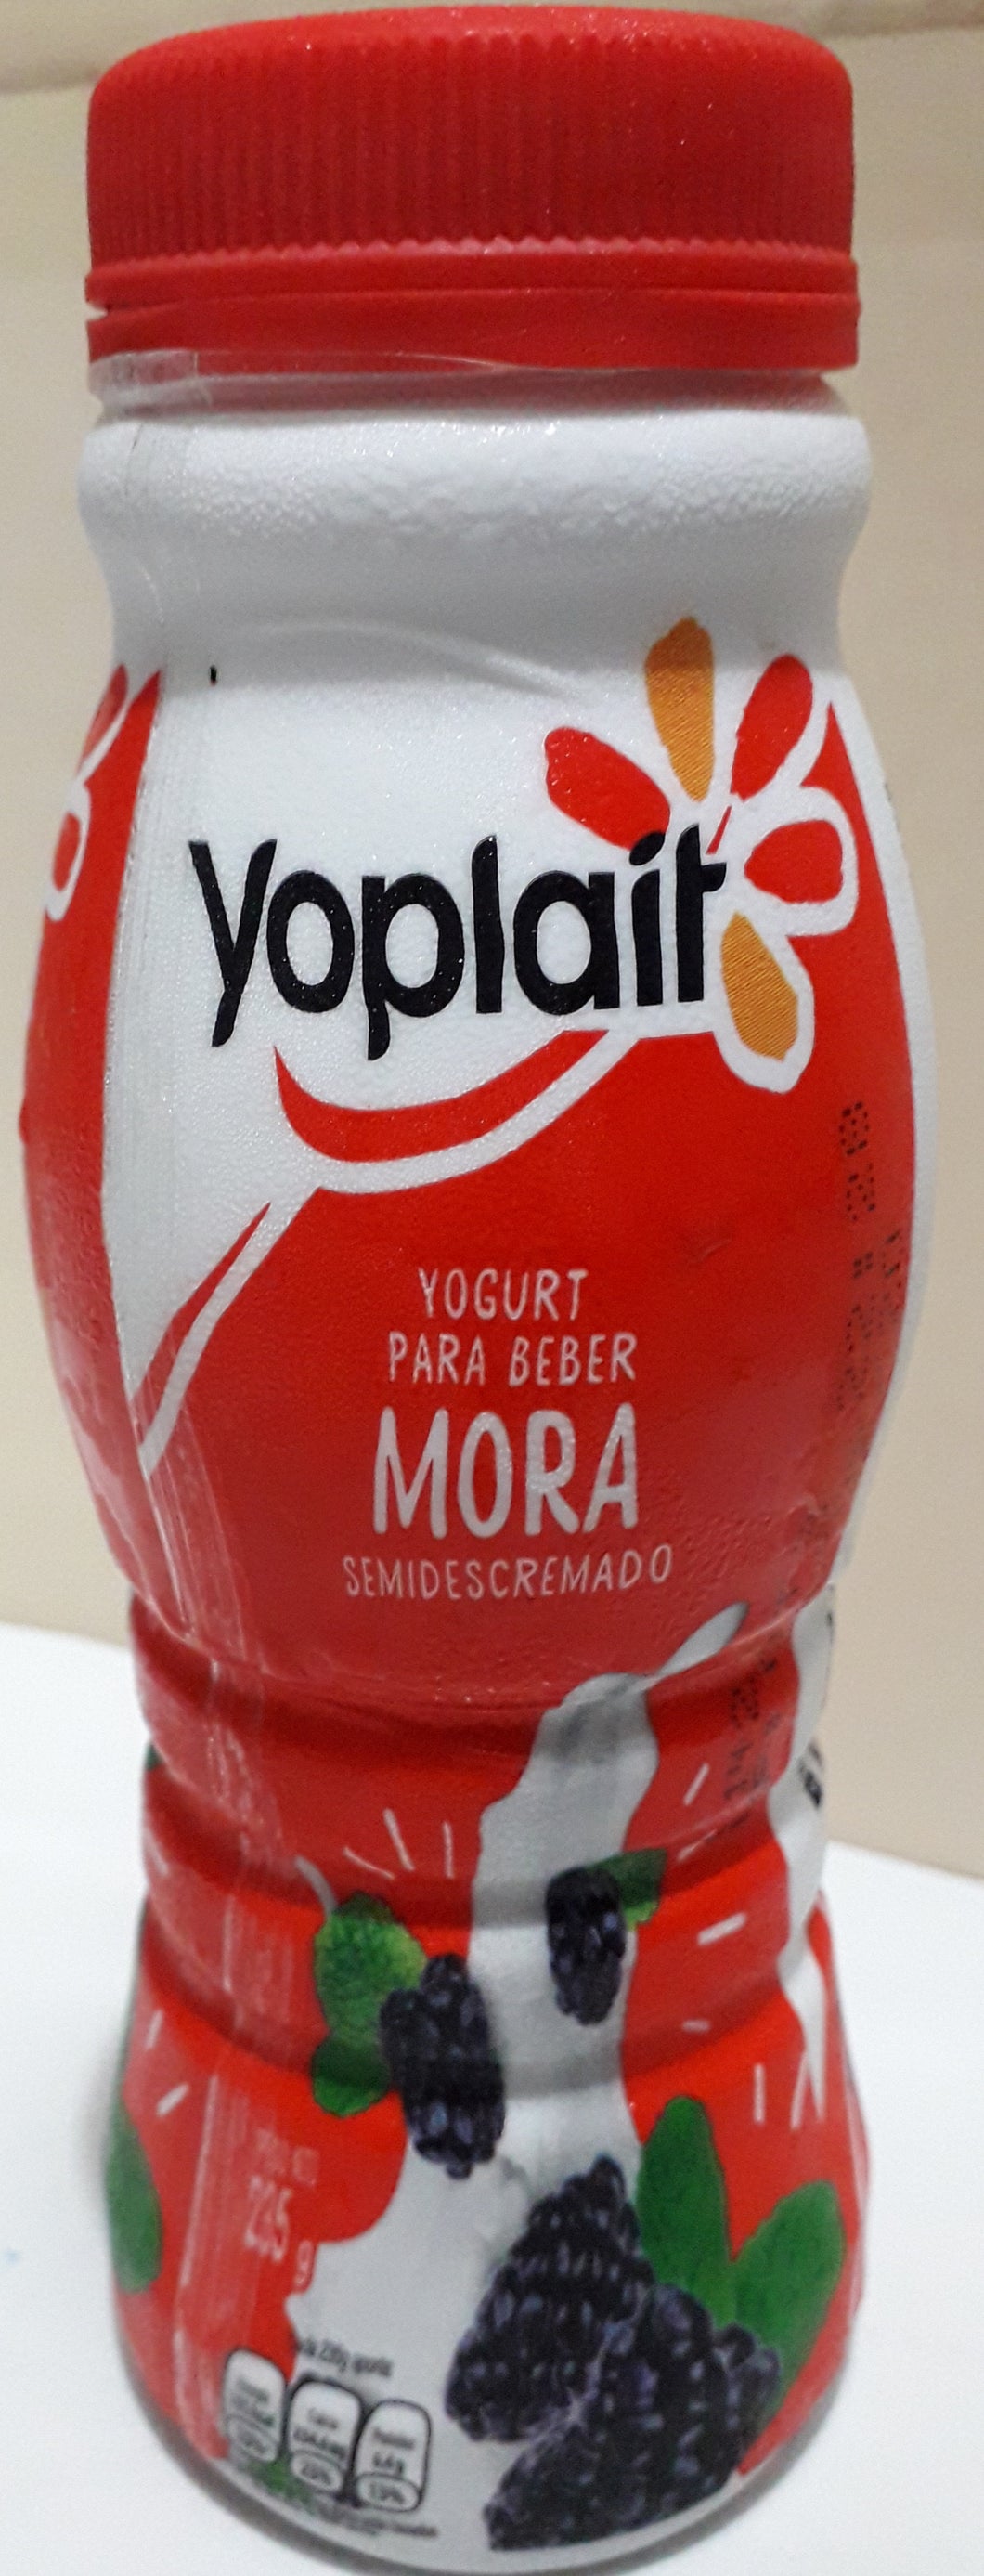 YOPLAIT MORA 235G